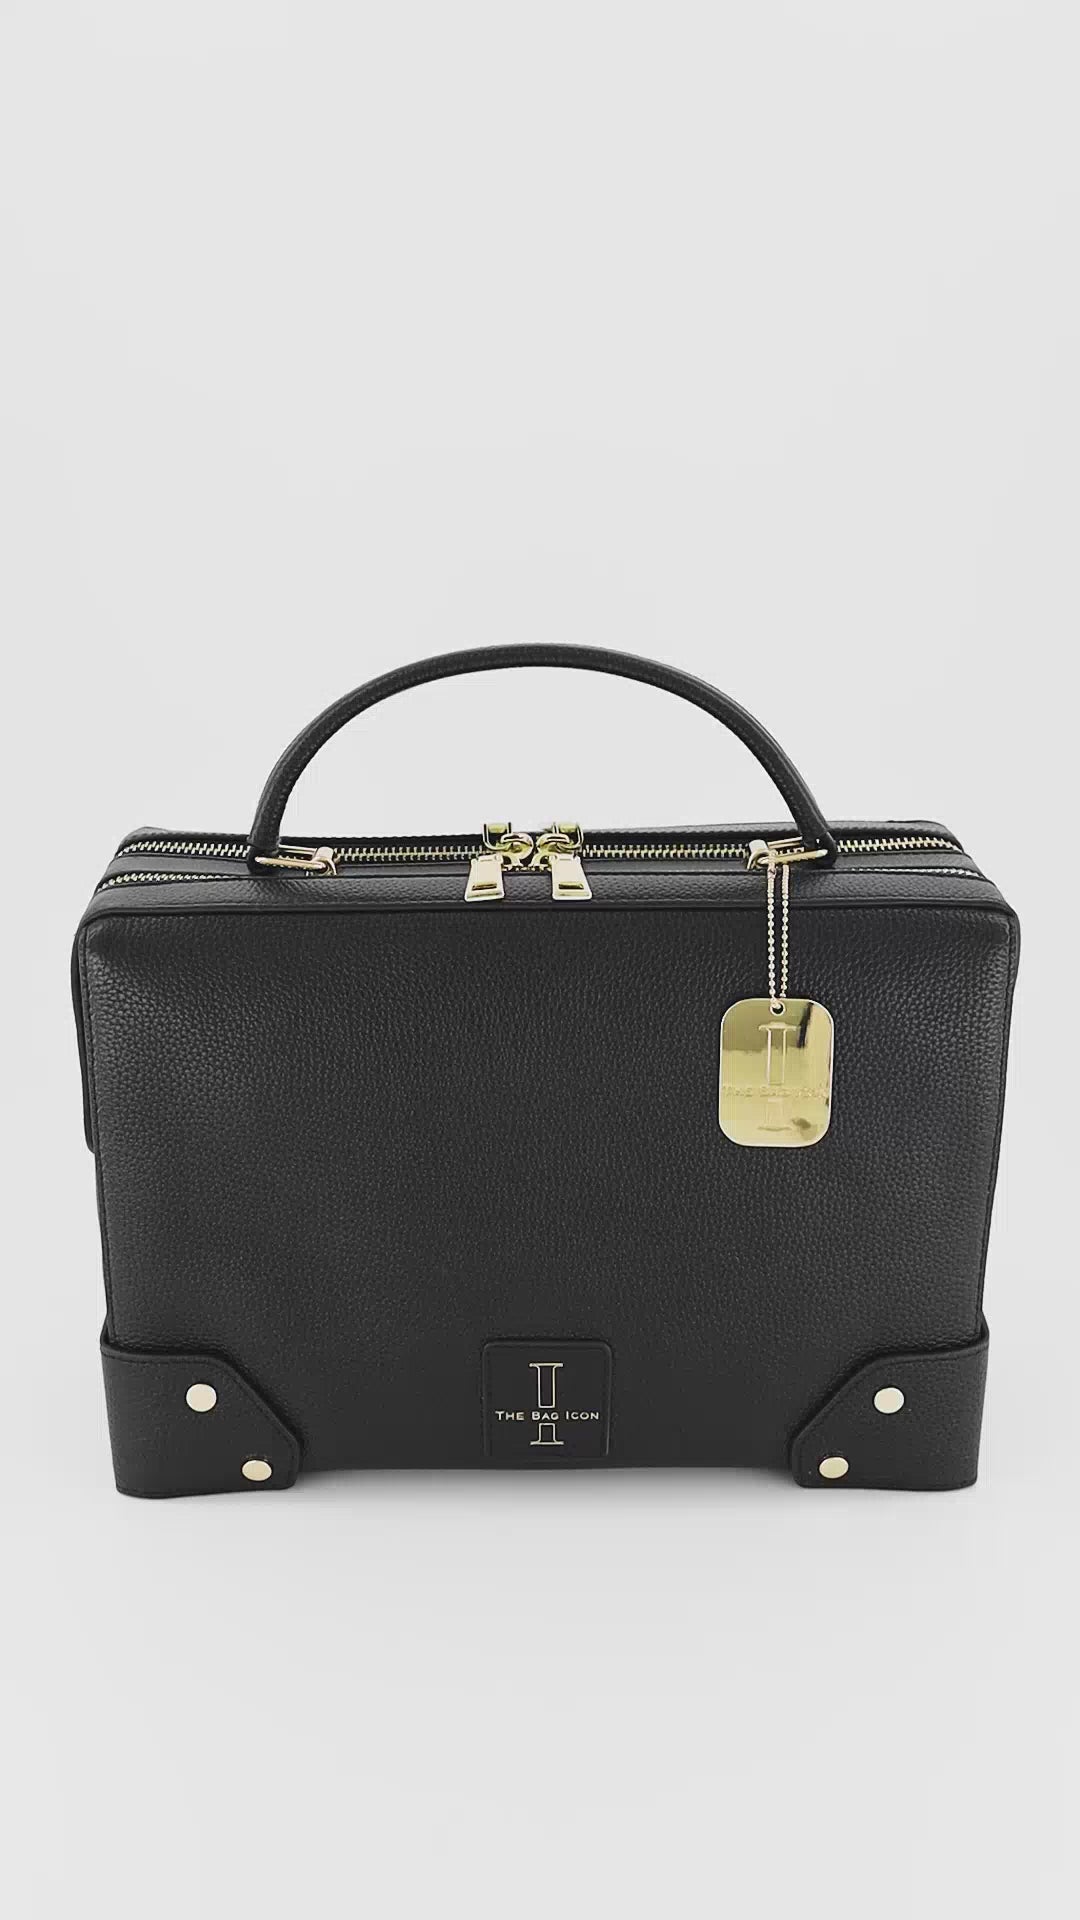 Buy Luxury Leather Handbags for Women | The Bag Icon